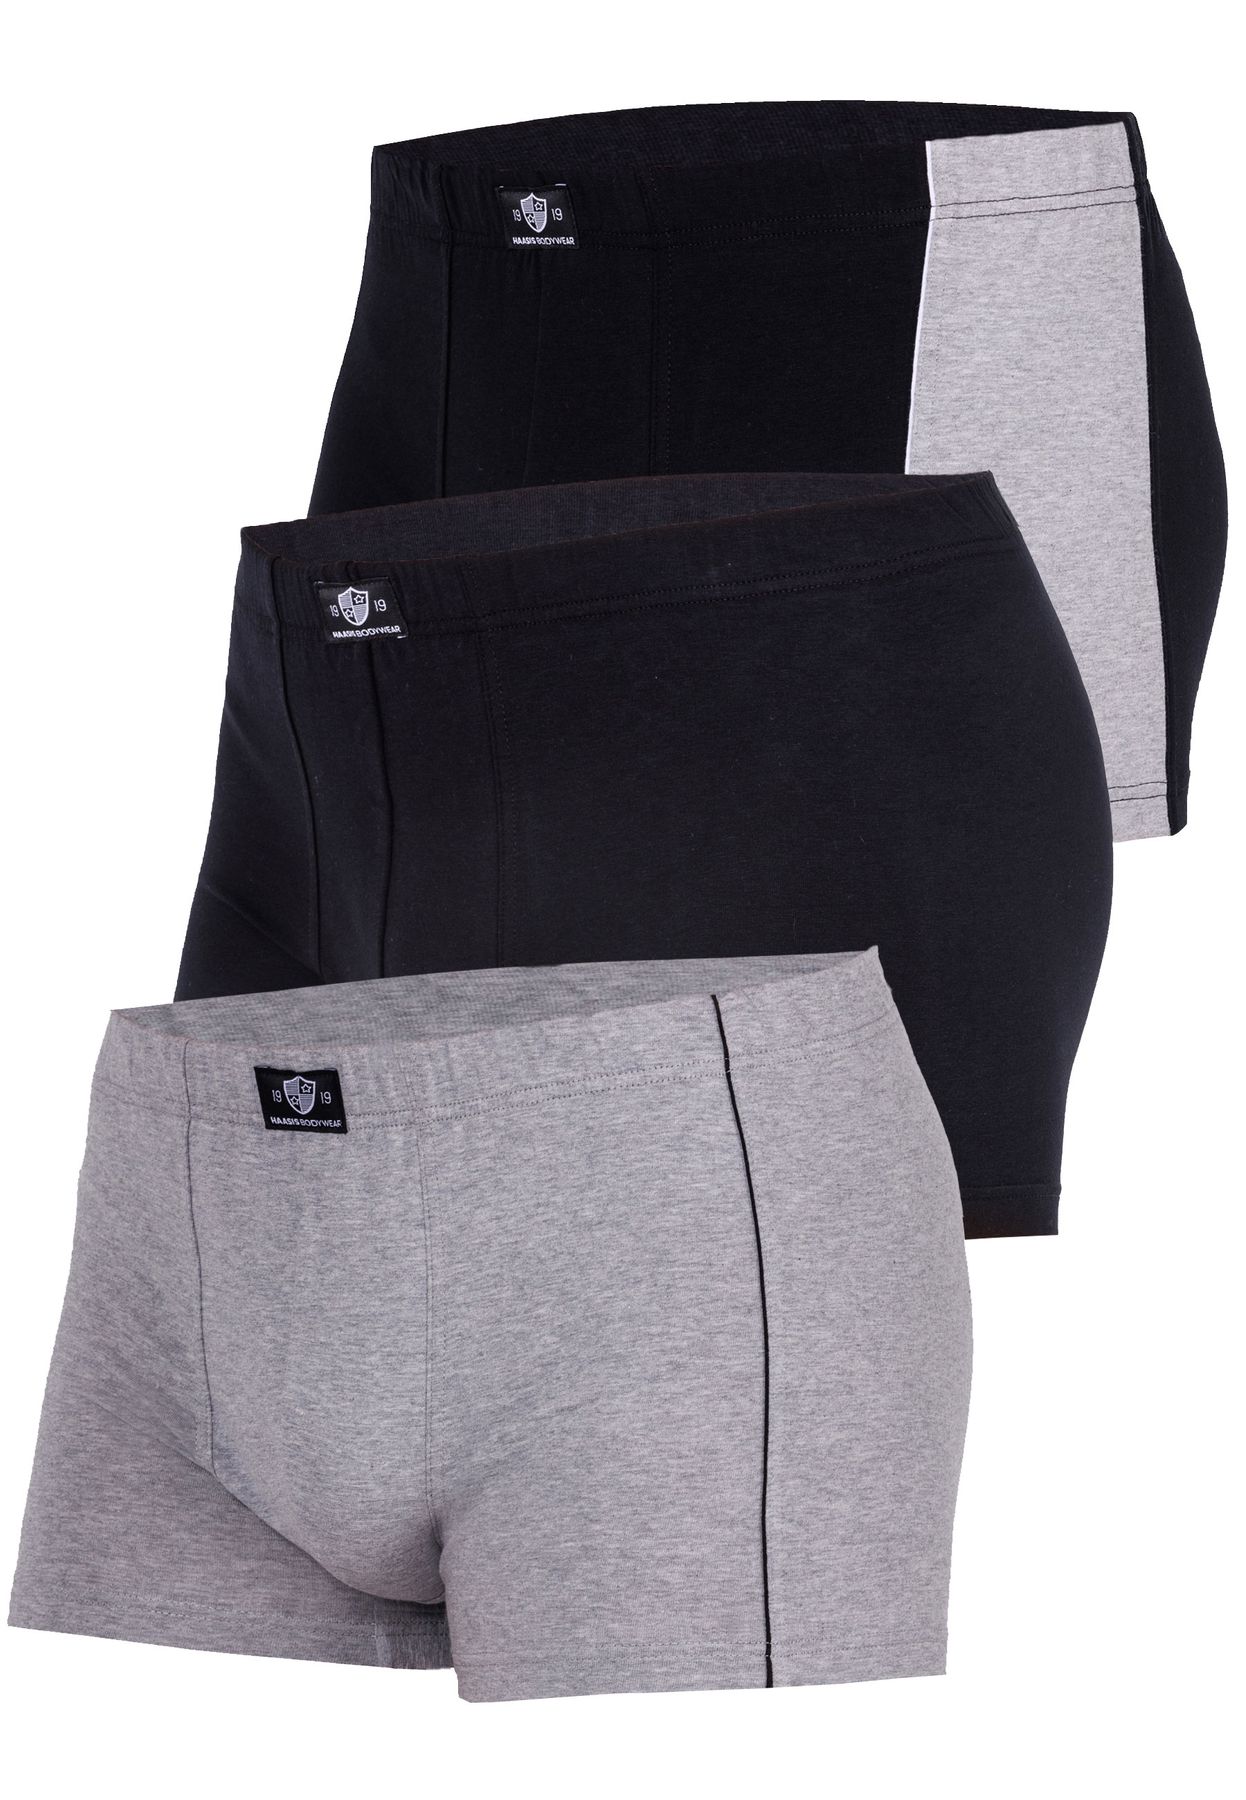 Боксеры Haasis Bodywear 3er-Set: Pants, цвет schwarz/graumeliert цена и фото